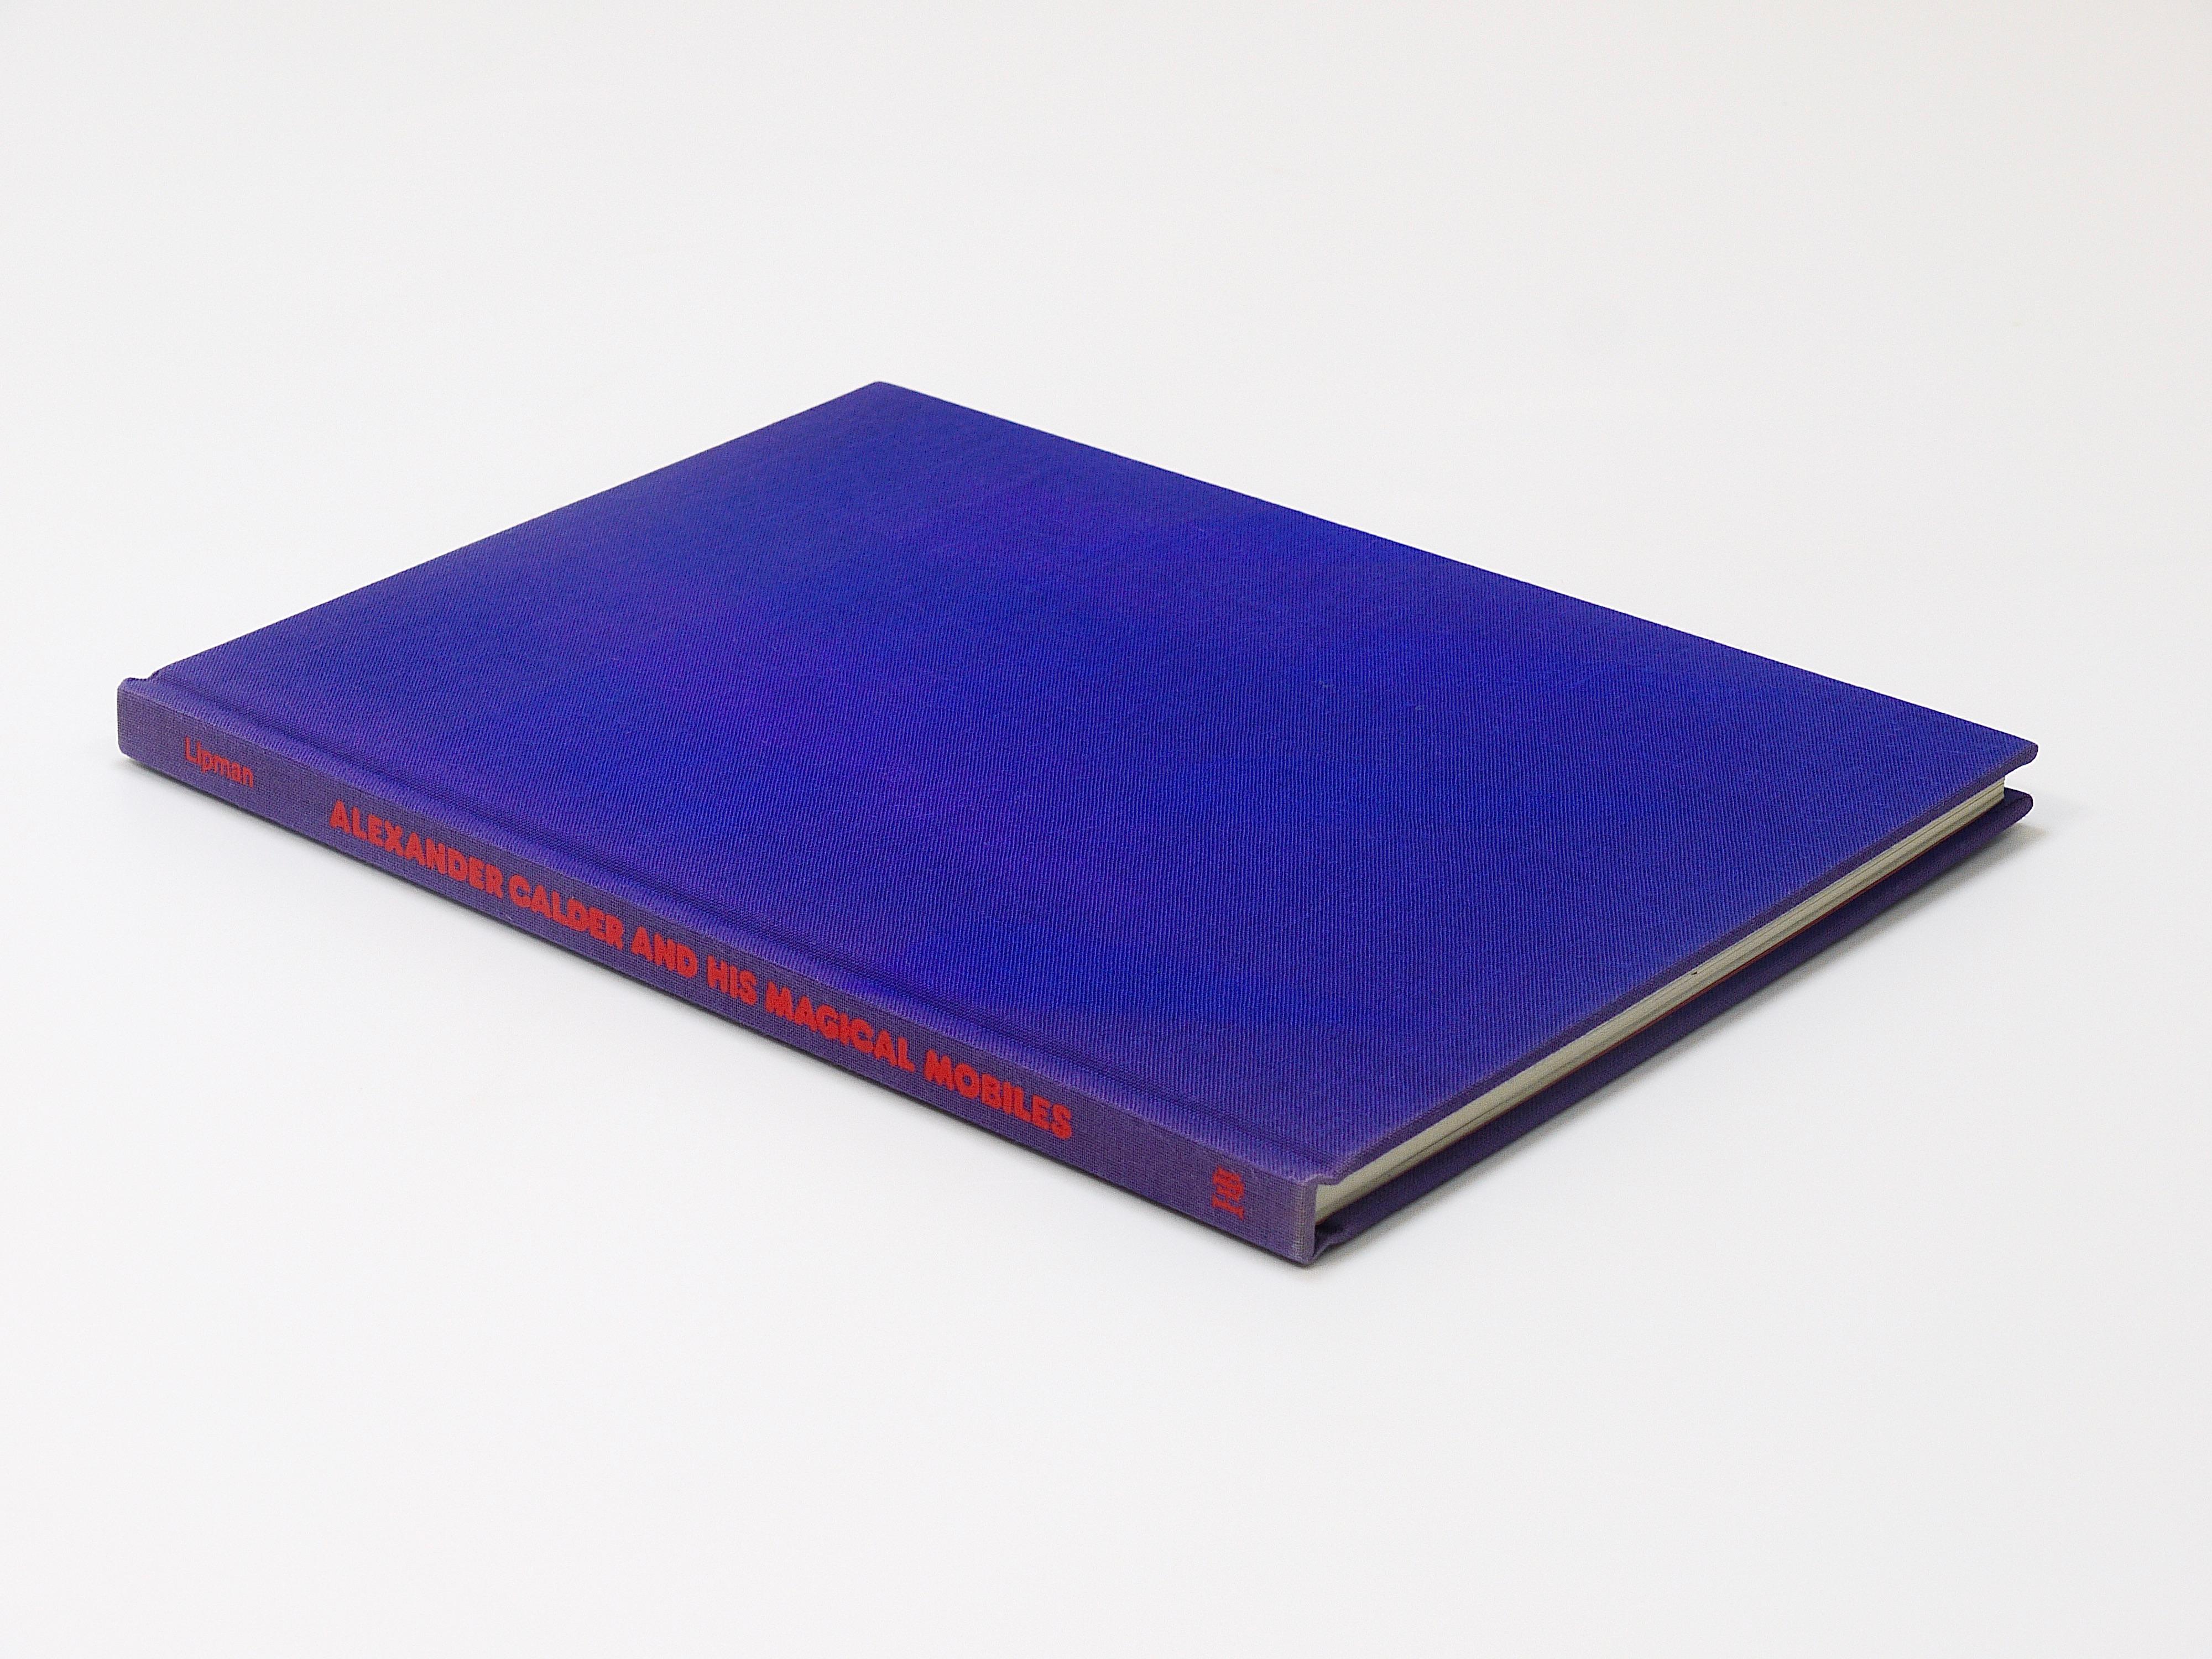 Livre « Alexander Calder and His Magical Mobiles Art Book », Lipman & Aspinwal, 1ère édition en vente 11